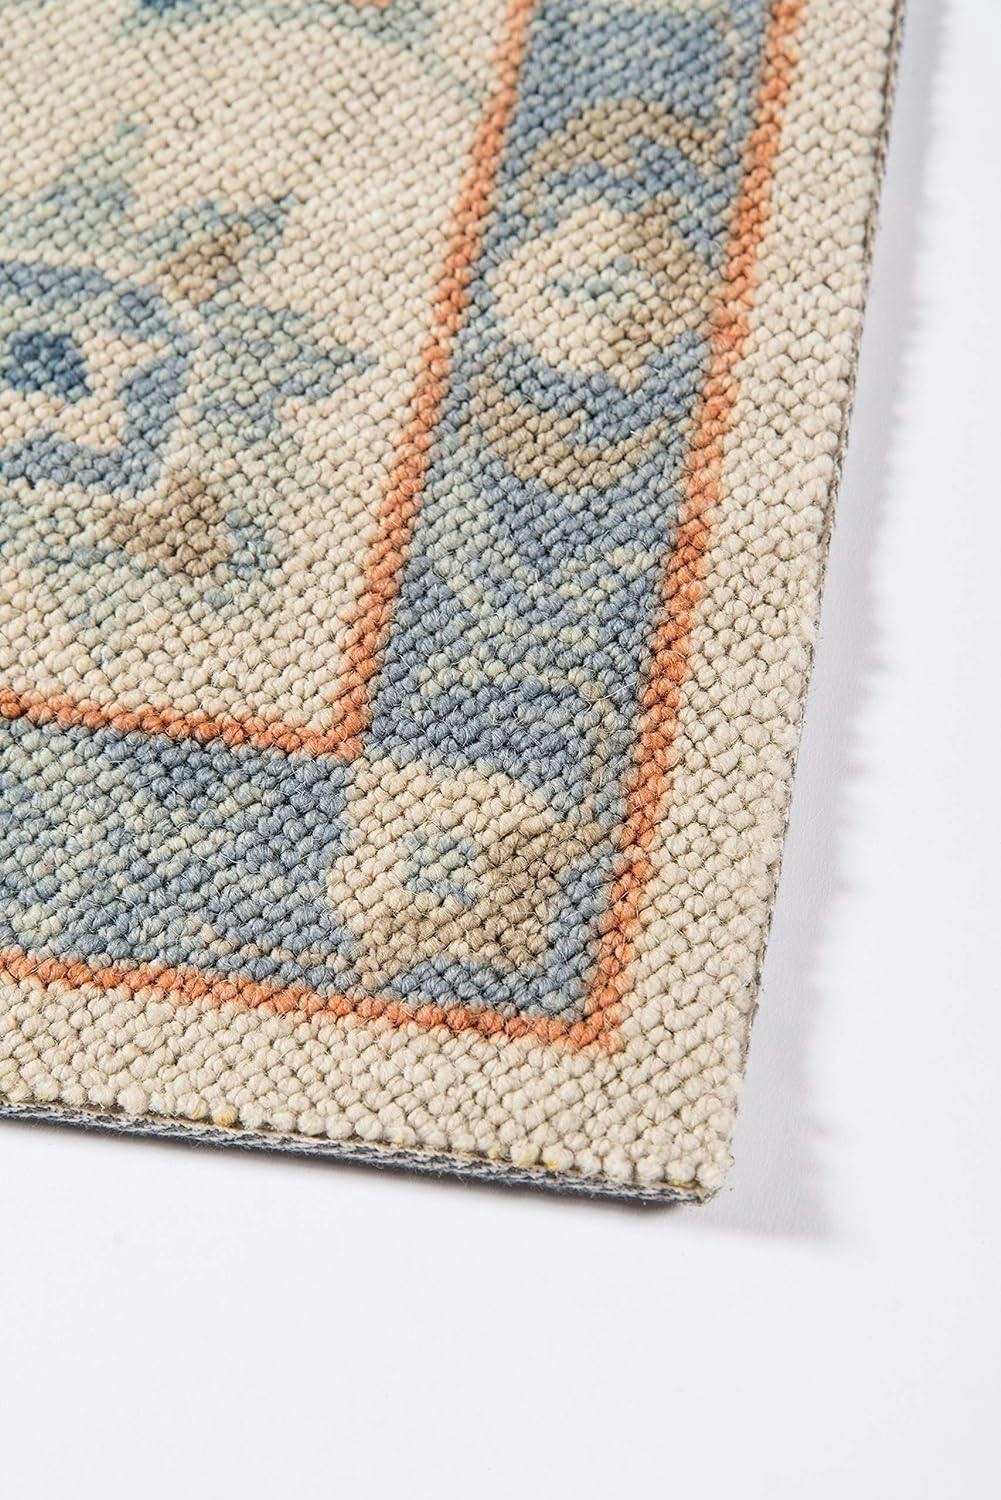 Elysian Medallion 9'9" x 12'6" Blue Wool Blend Area Rug